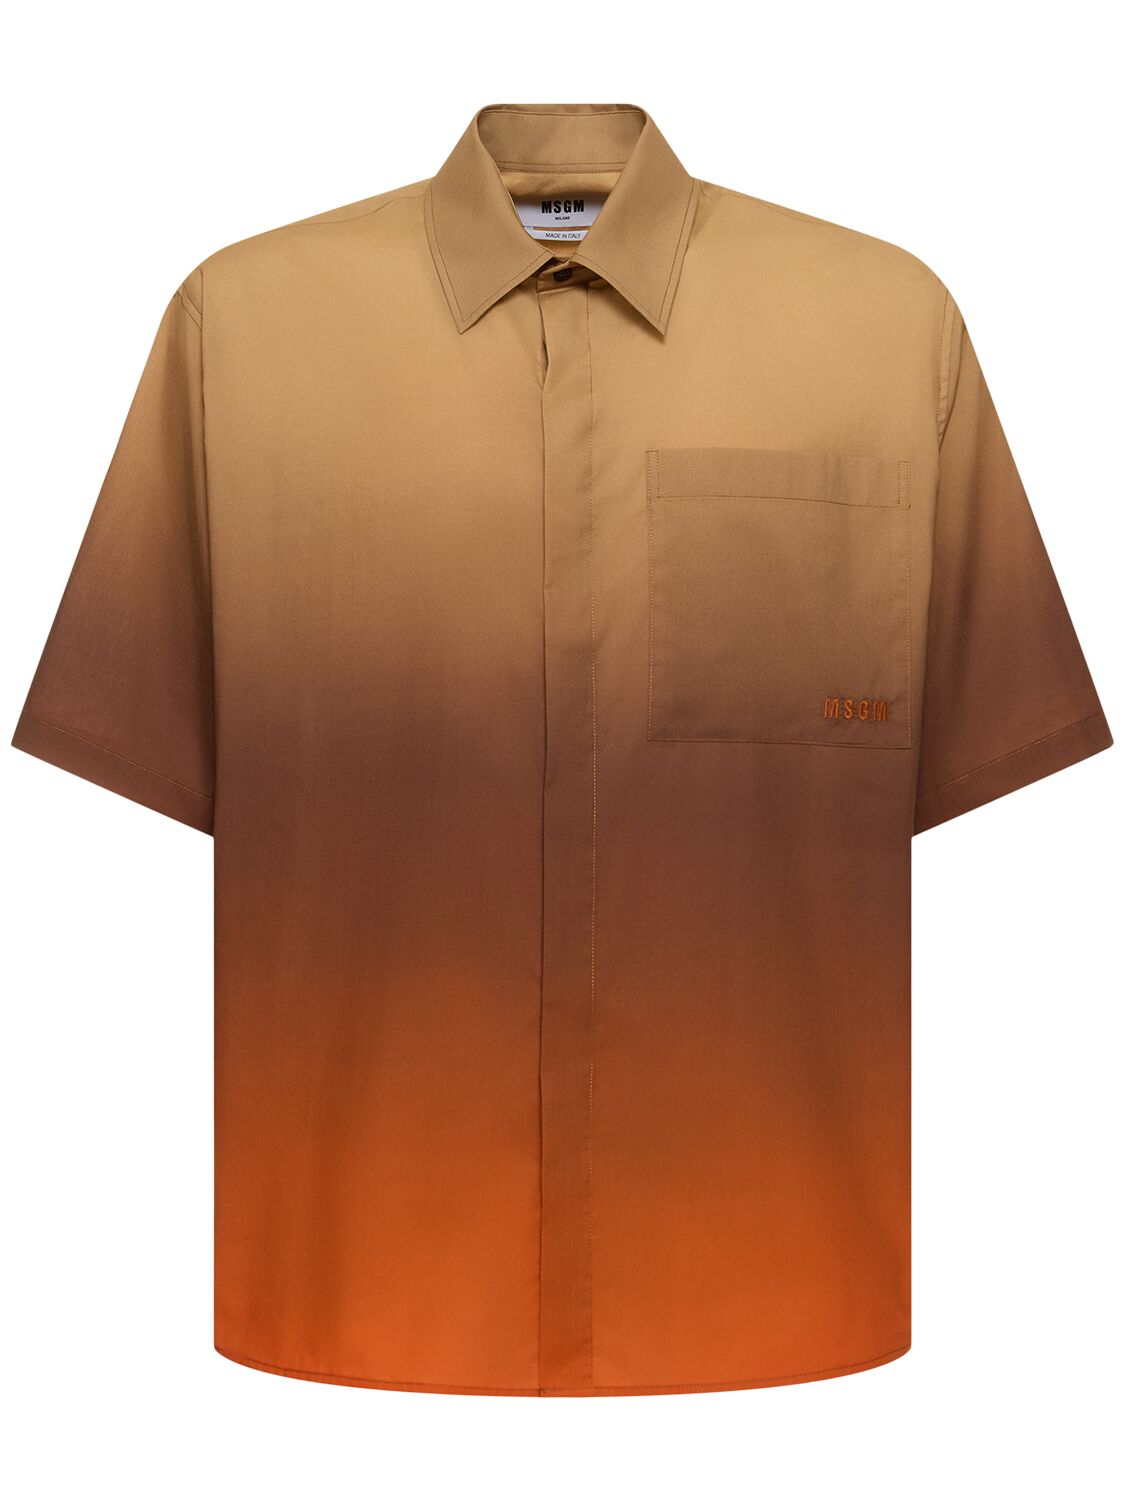 Msgm Degradé Cotton Poplin S/s Shirt In Orange